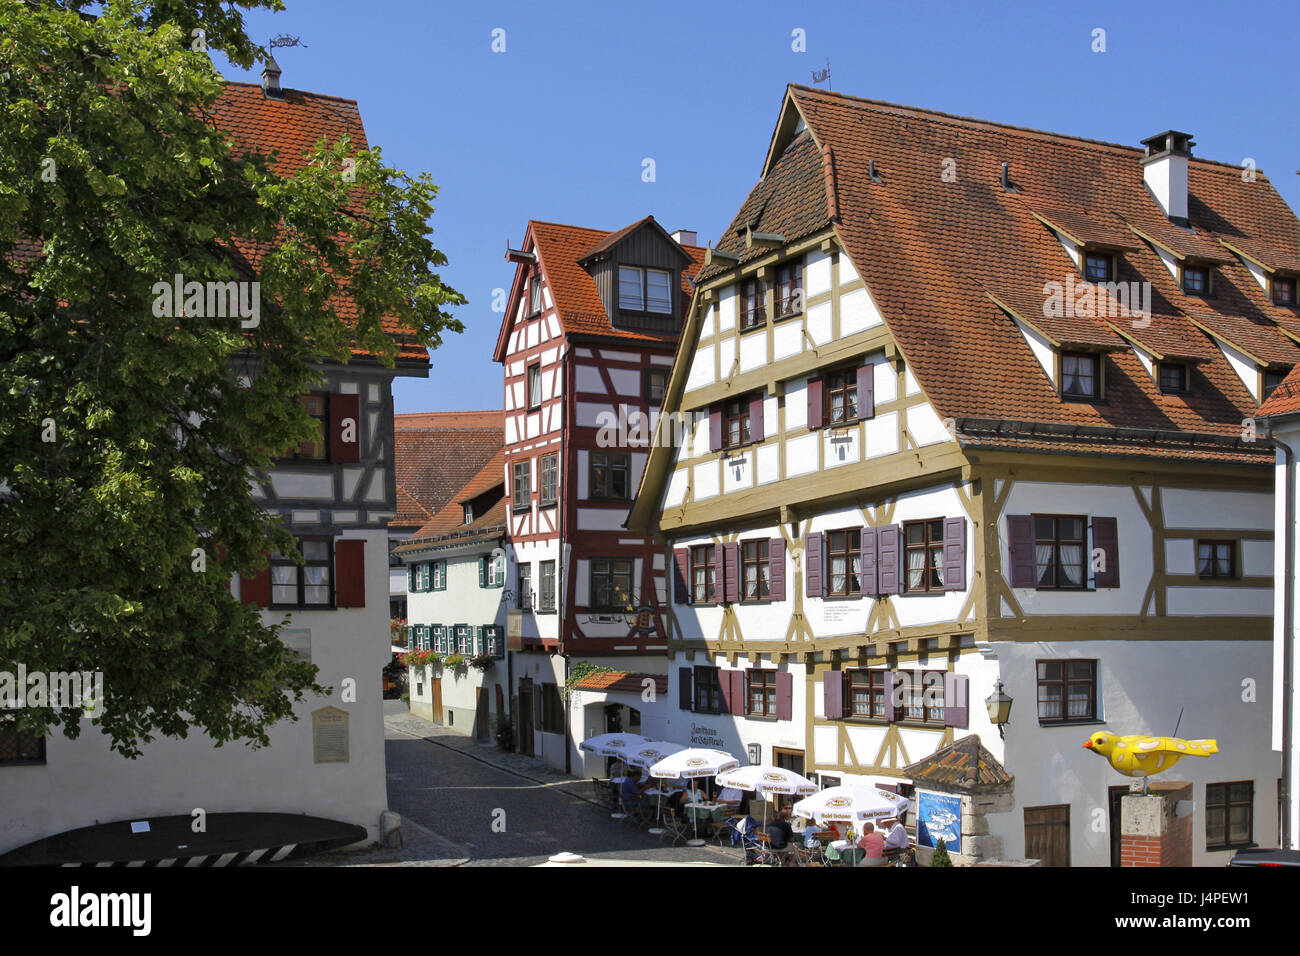 Alemania, Ulm, Casco antiguo, casas con entramados de madera, Foto de stock